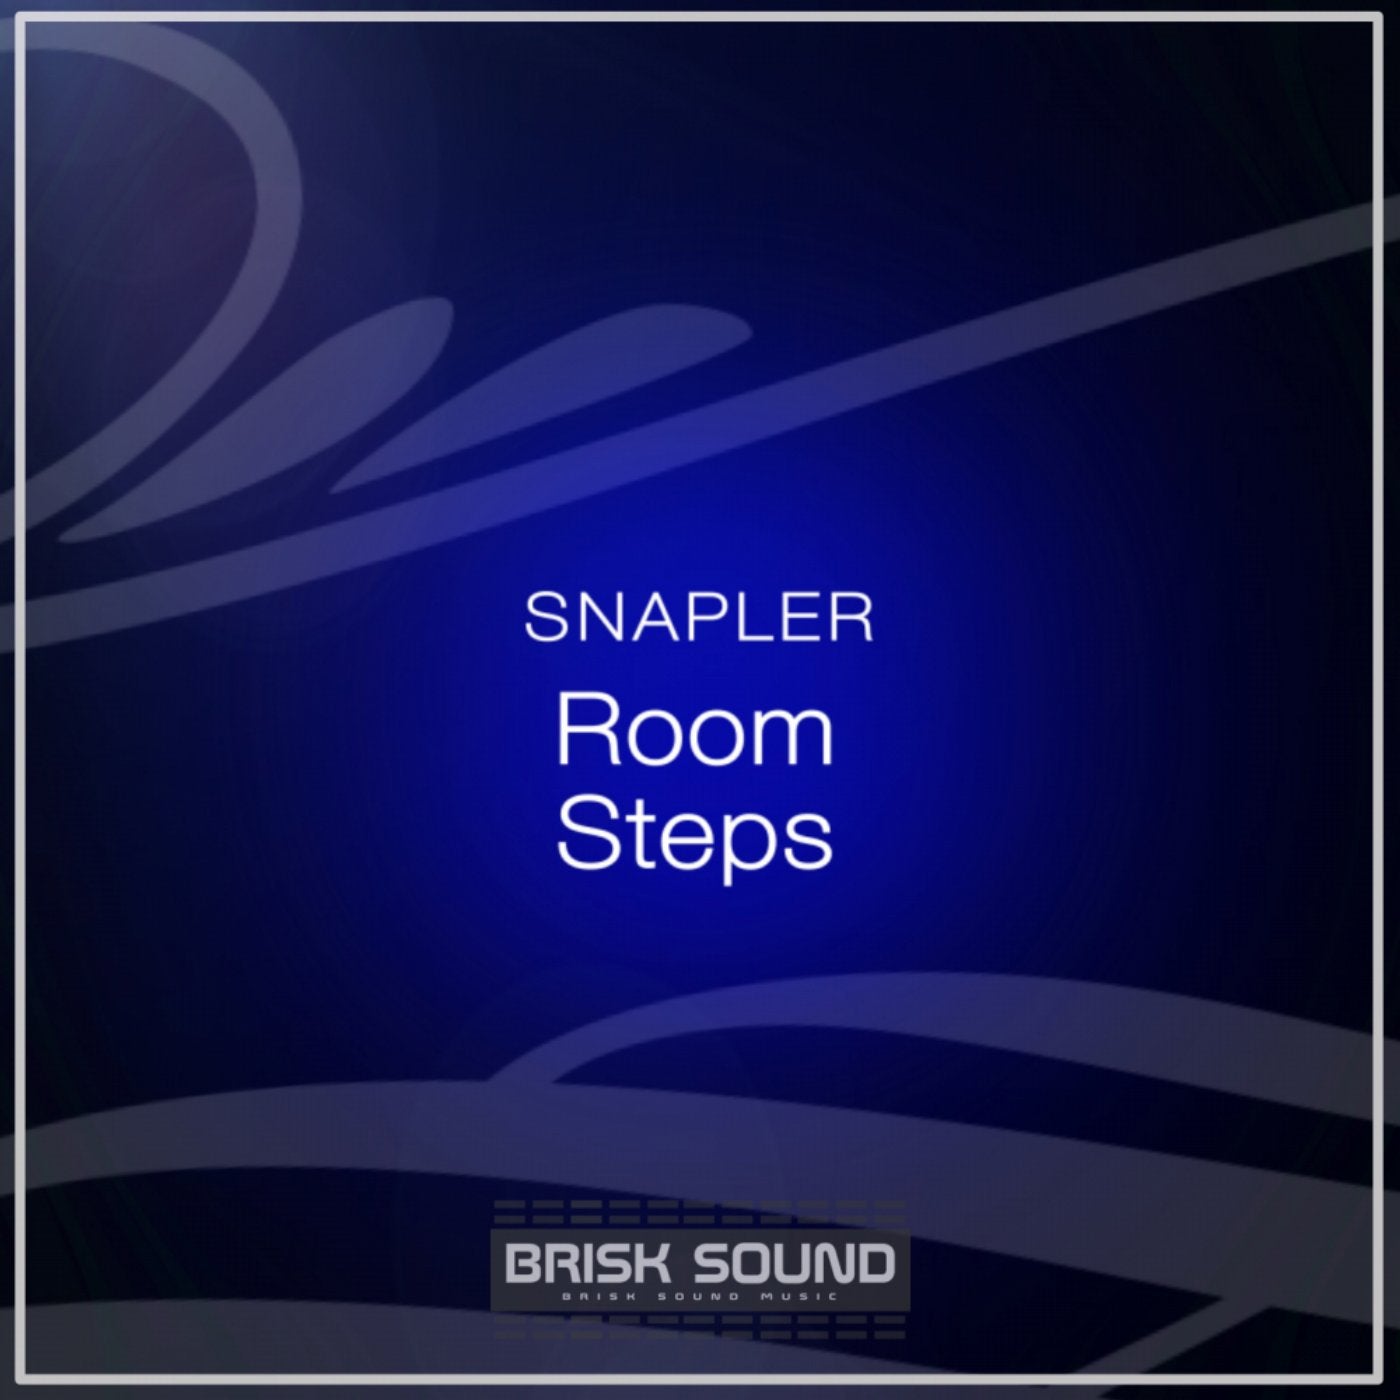 Room / Steps